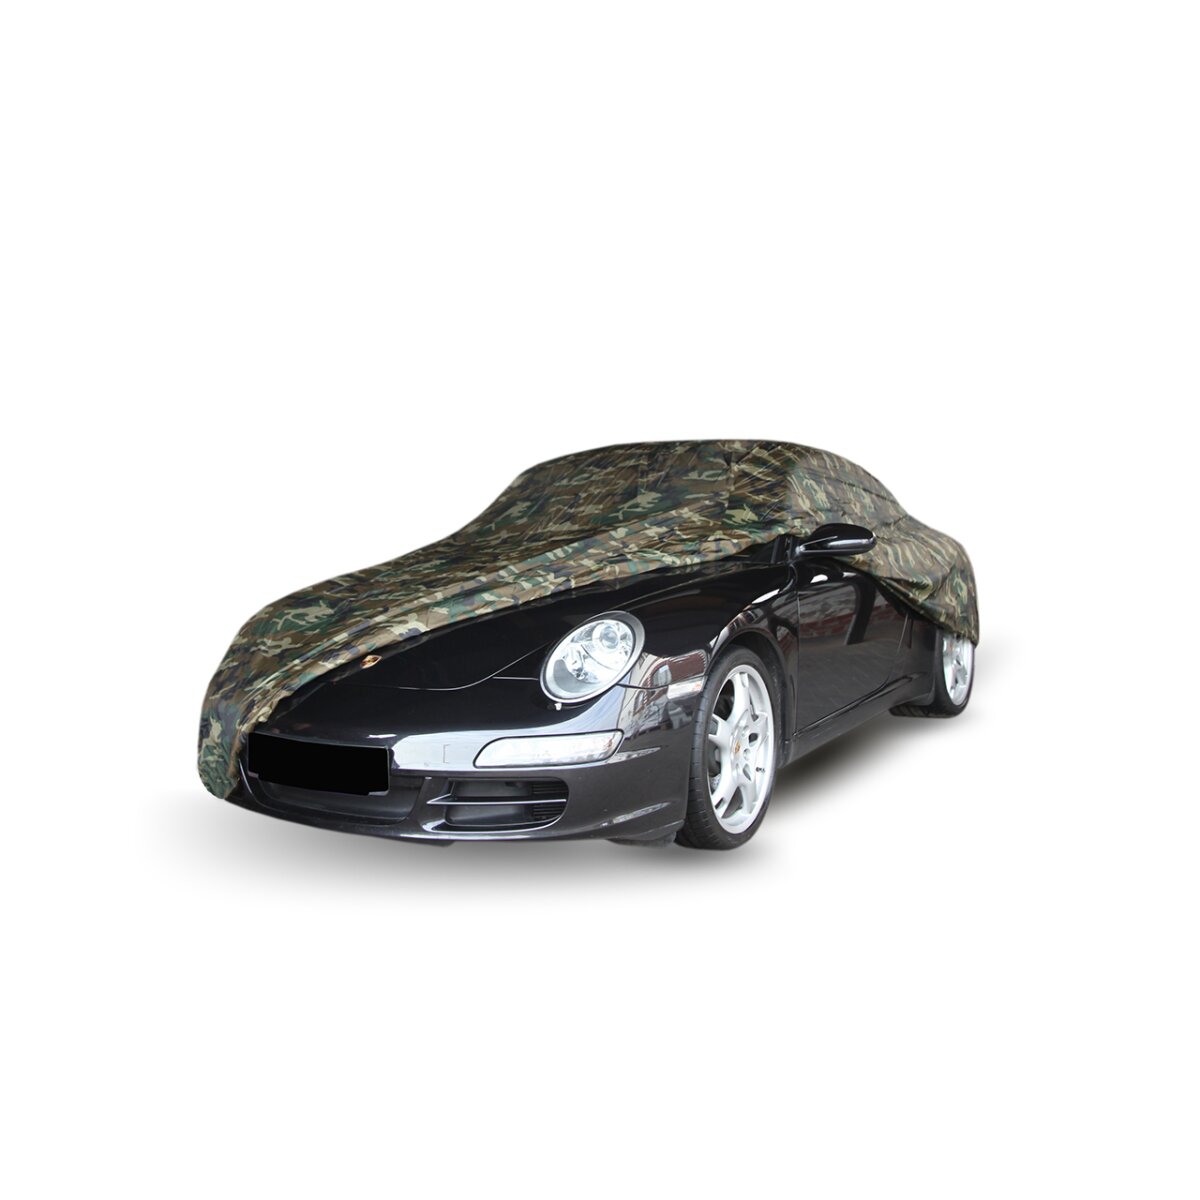 https://www.autoabdeckung.com/media/image/product/3431/lg/car-cover-autoabdeckung-camouflage-fuer-porsche-911-991-turbo.jpg